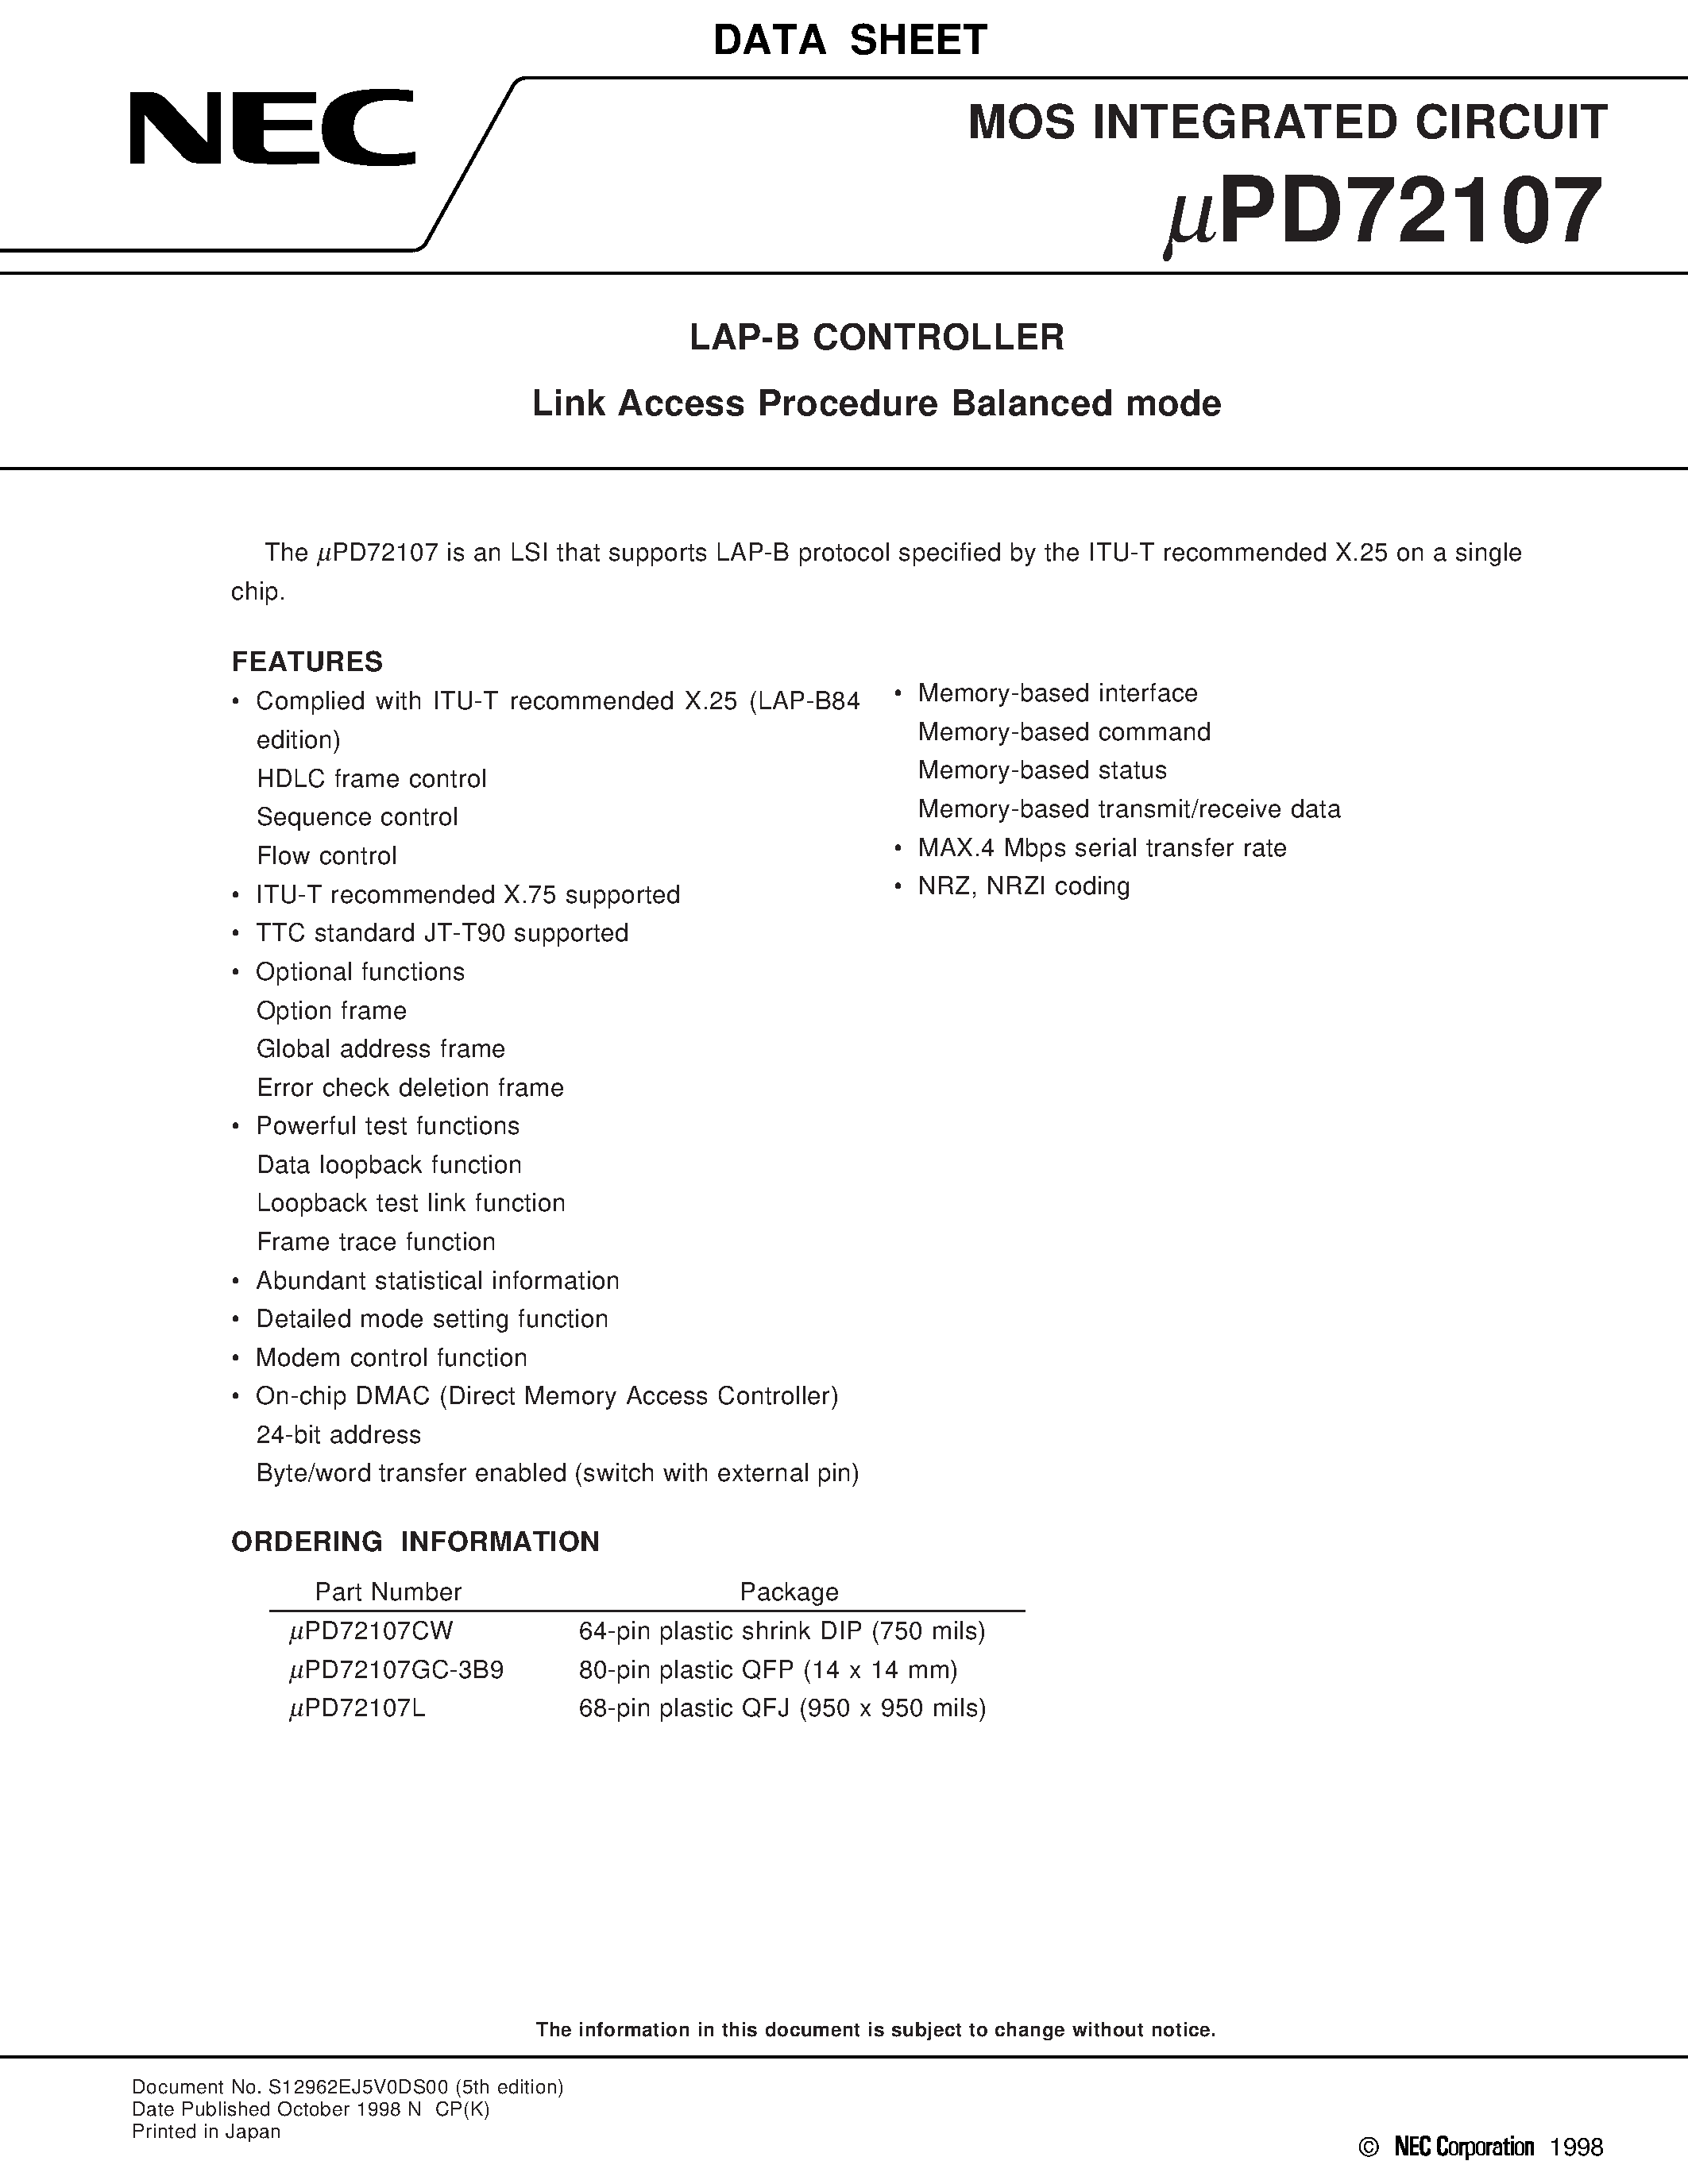 Datasheet uPD72107GC-3B9 - LAP-B CONTROLLER(Link Access Procedure Balanced mode) page 1